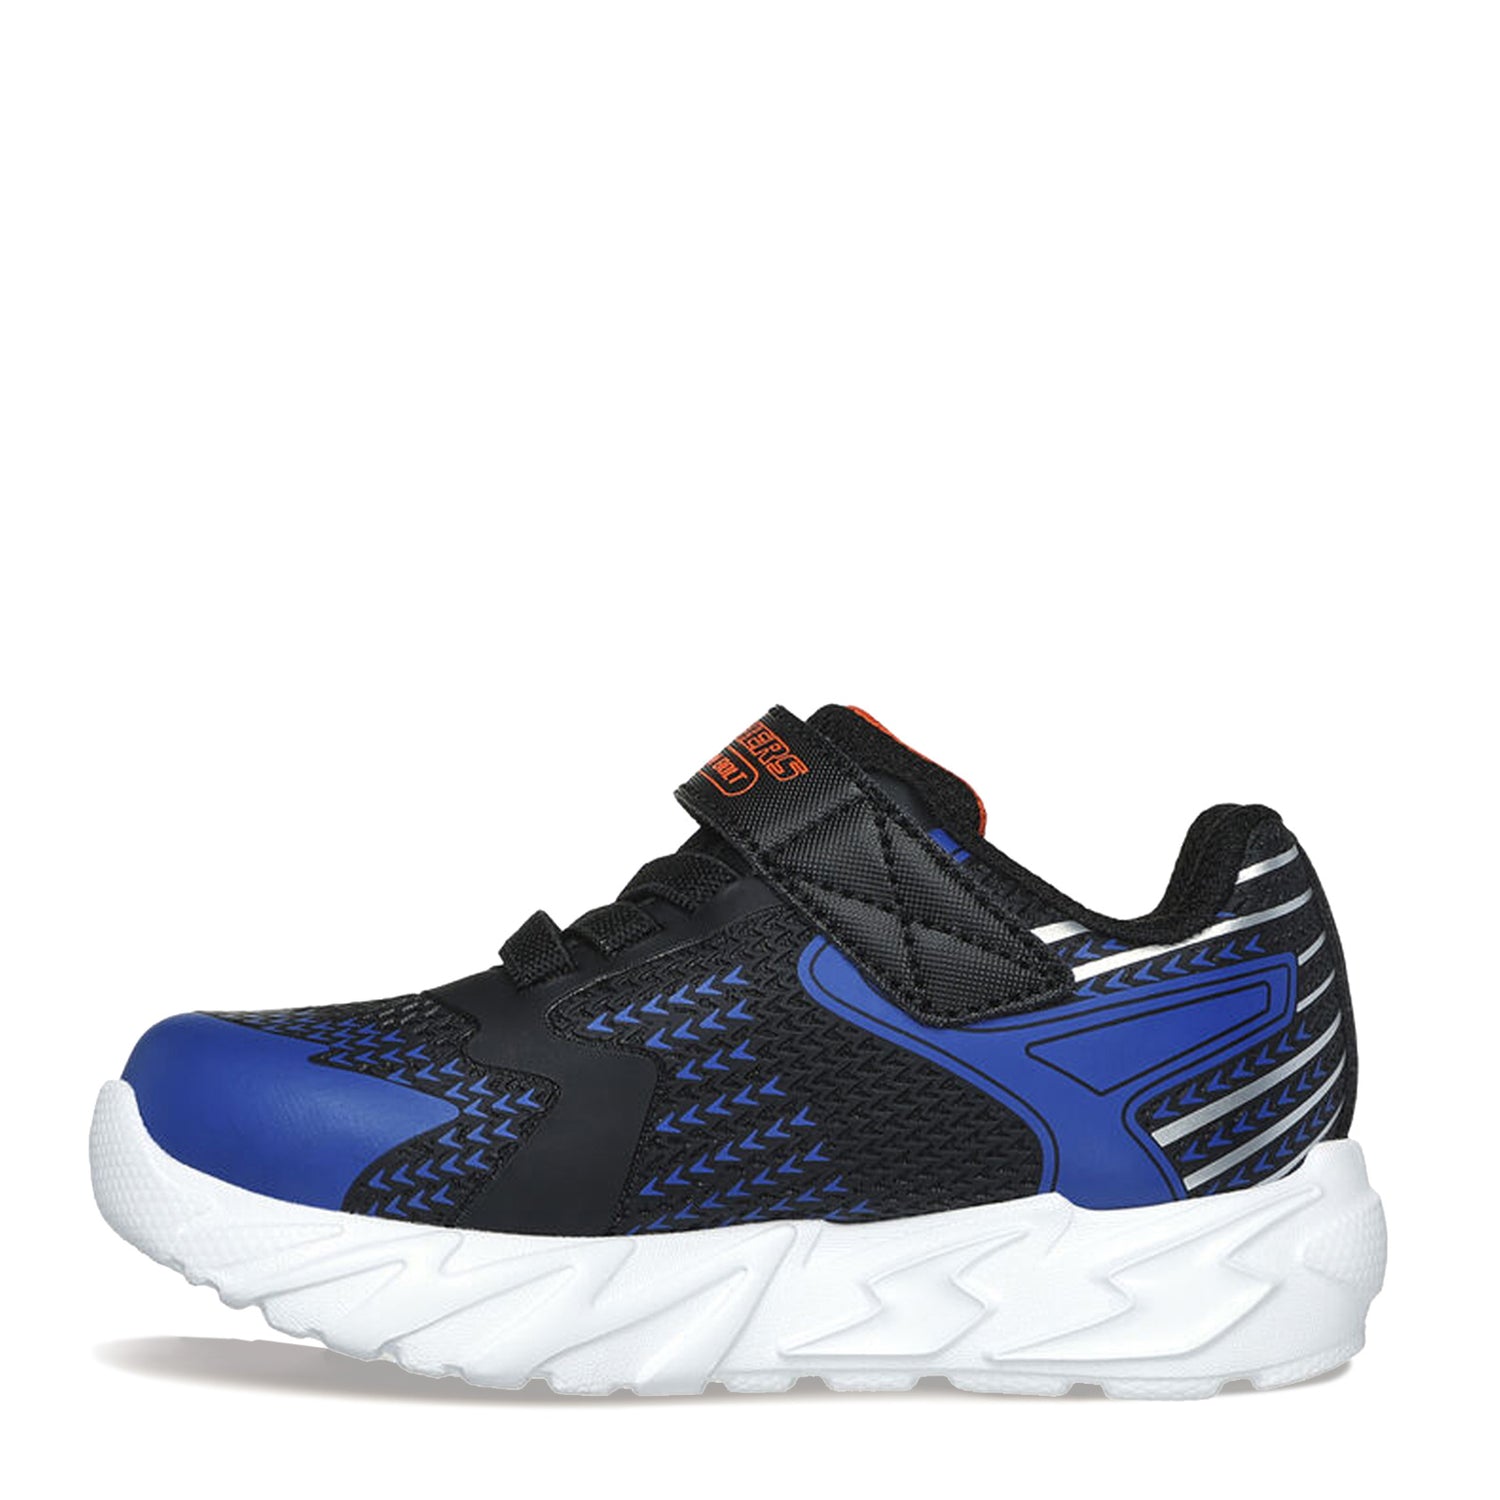 Peltz Shoes  Boy's Skechers S Lights: Flex-Glow Bolt Sneaker – Toddler Black/Blue/Lime/Orange 400138N-BKBL